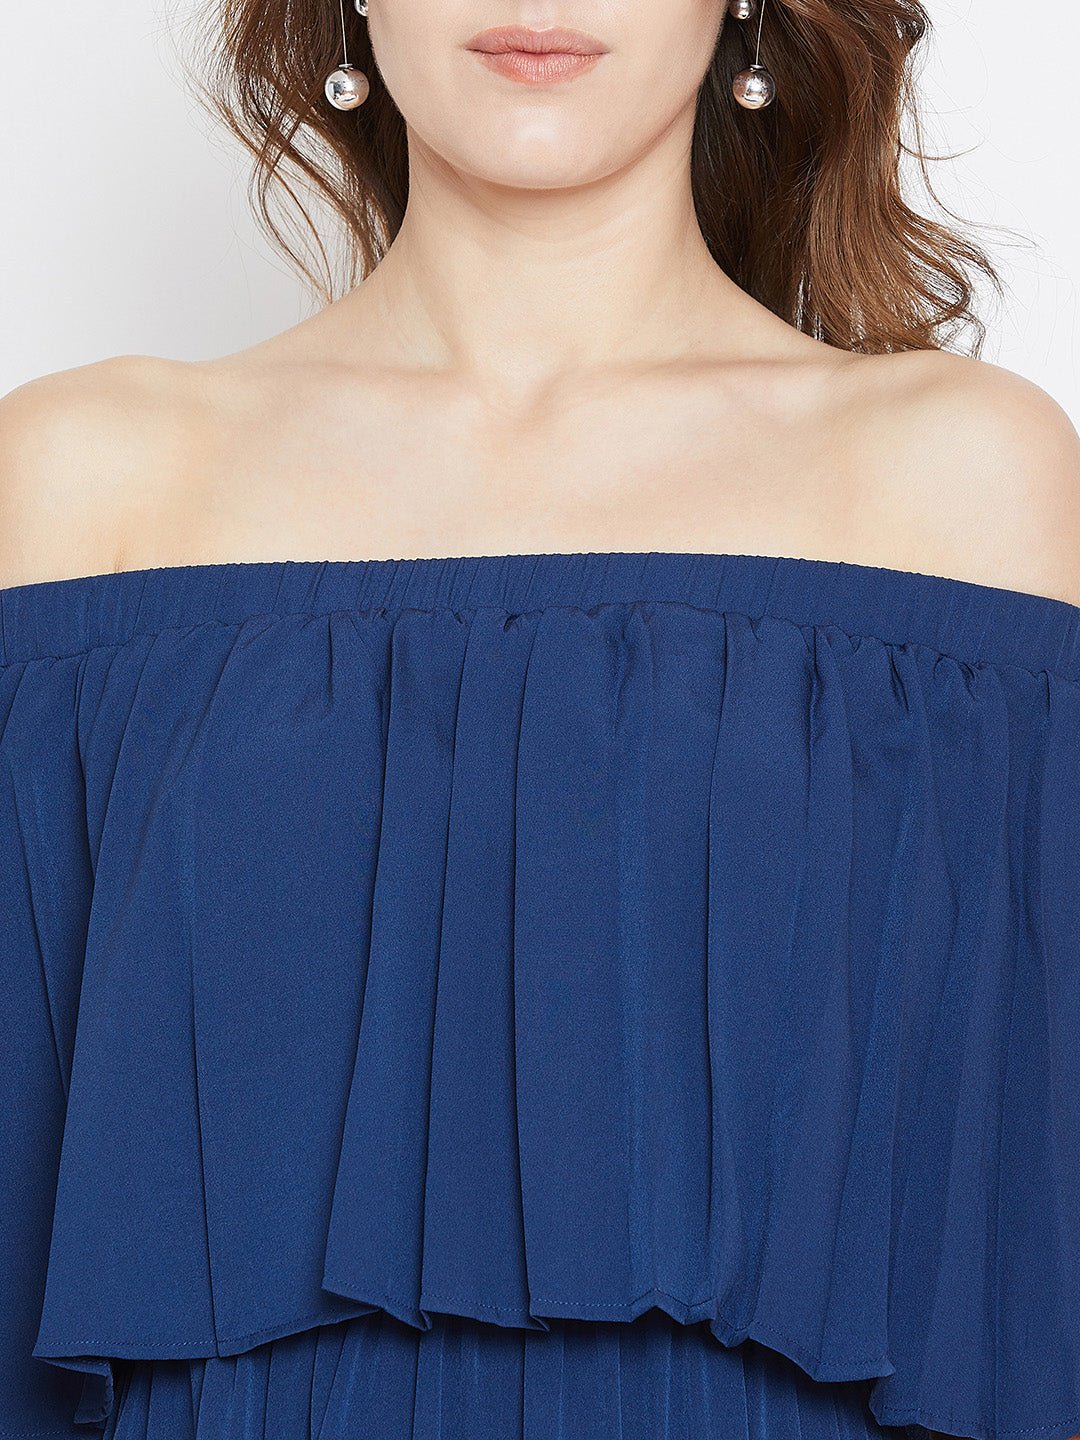 Folk Republic Women Solid Blue Off-Shoulder Neck Three-Quarter Sleeve Crepe Flared Maxi Dress - #folk republic#